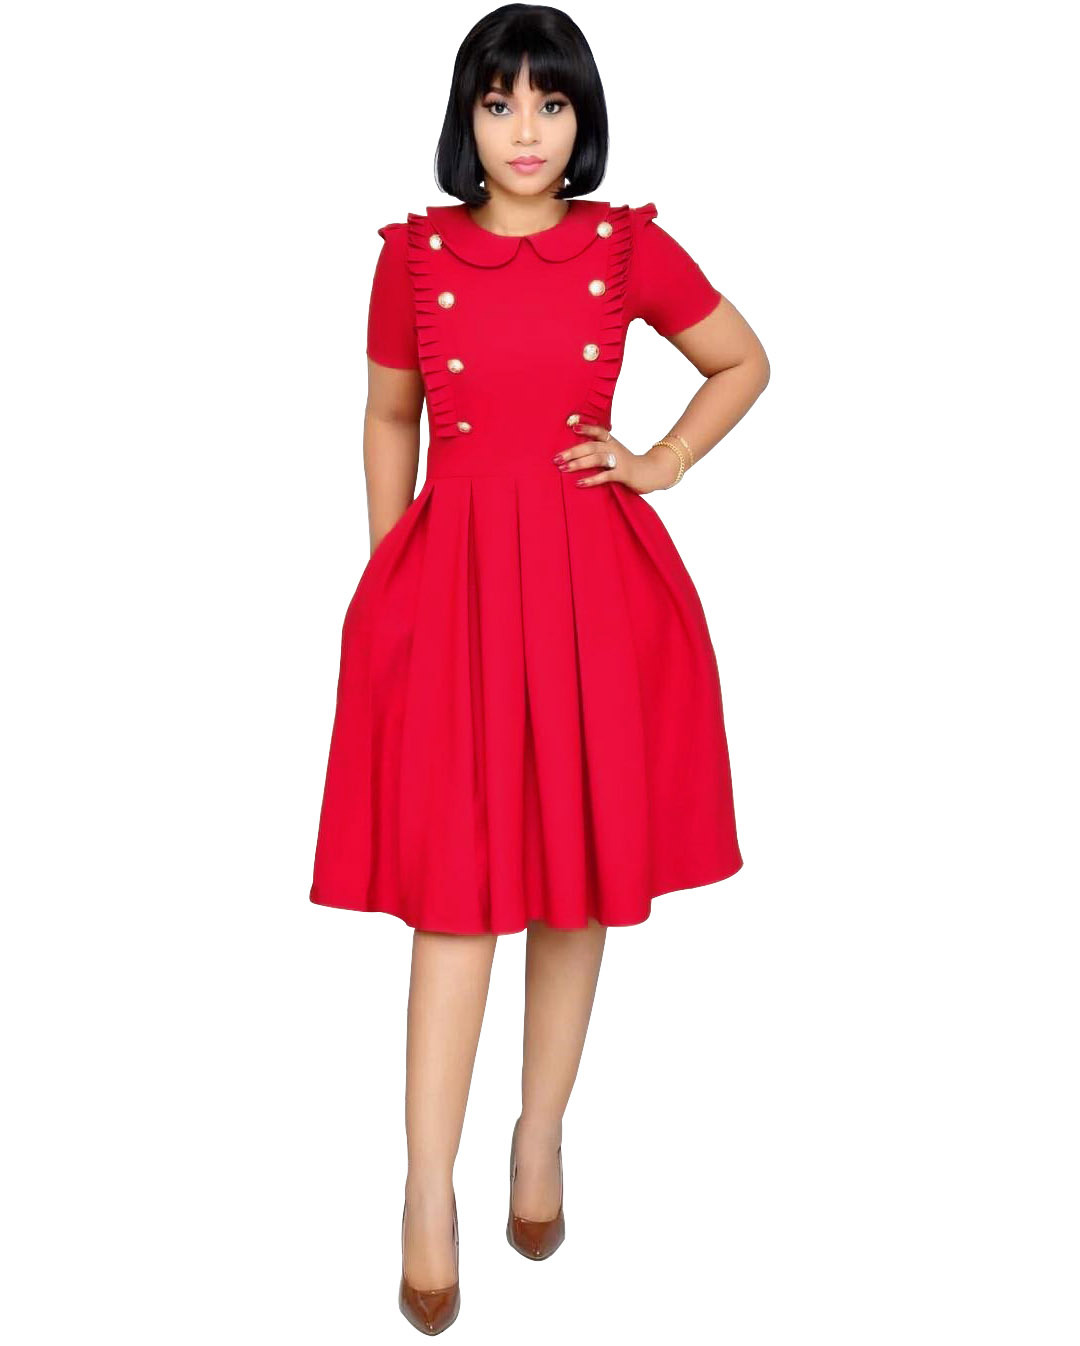 red peter pan dress